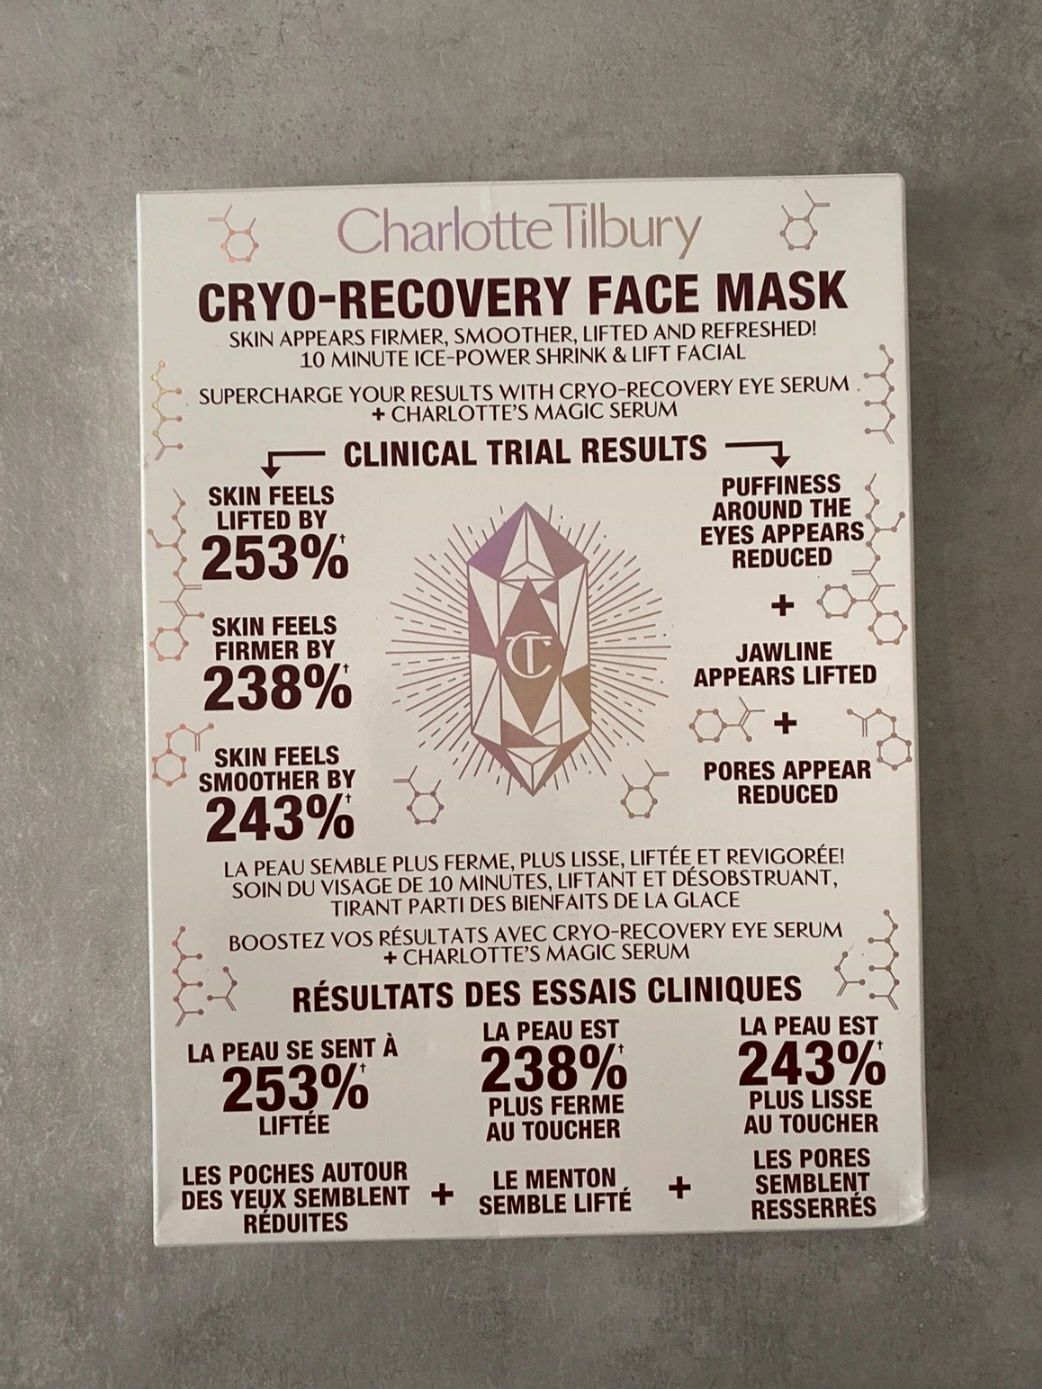 Charlotte Tilbury Cryo Recovery Mask Face Mask
CHARLOTTE TILBURY